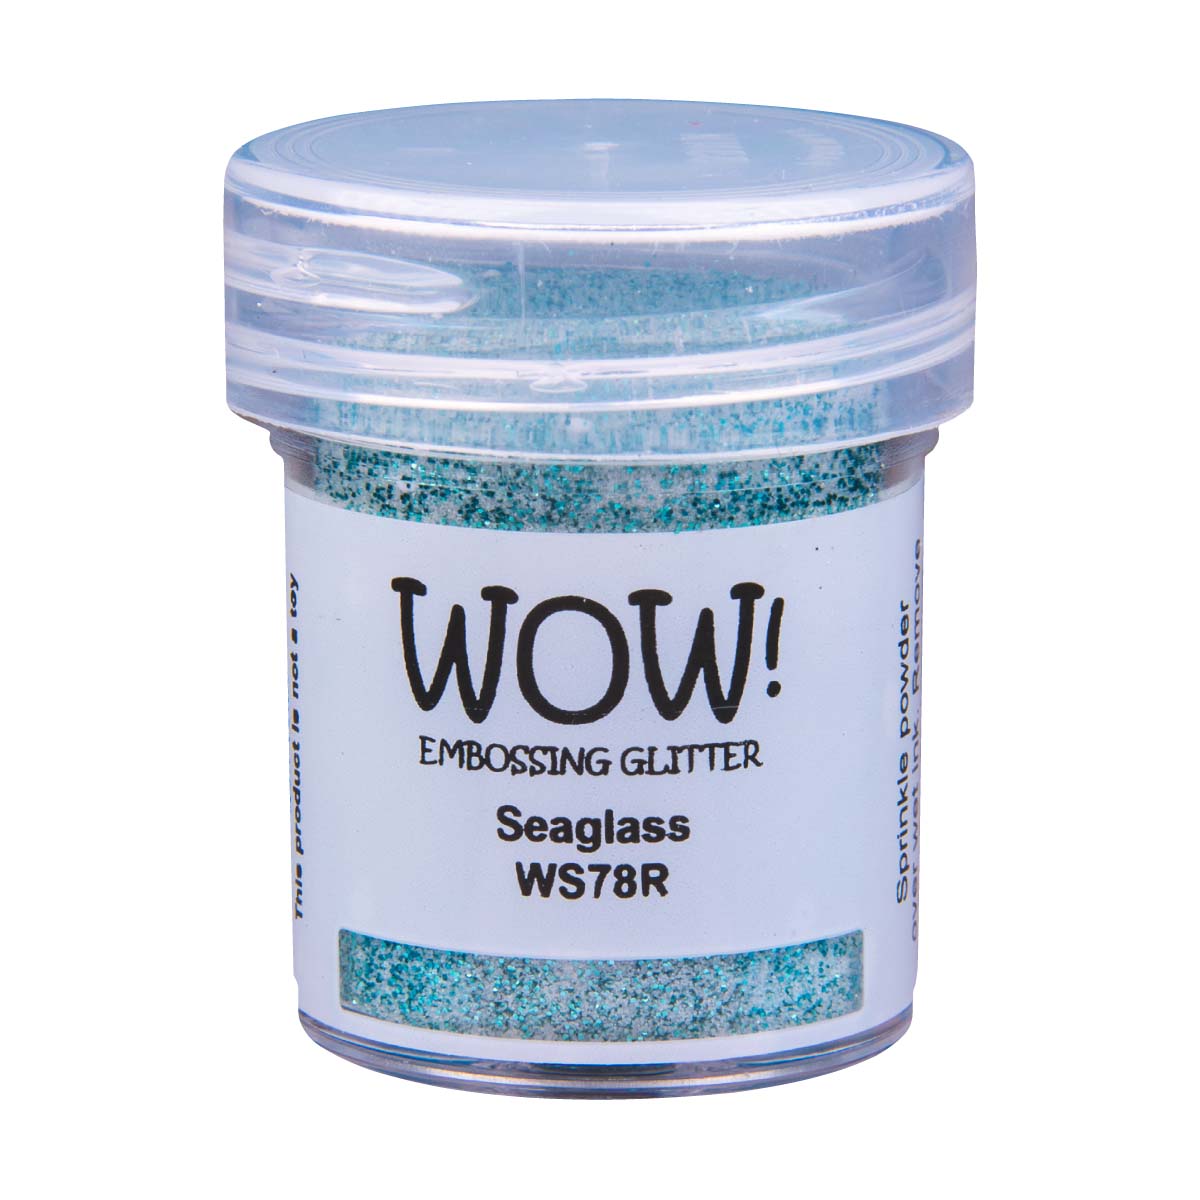 WOW! Embossing Glitter, 15ml Jar - Seaglass